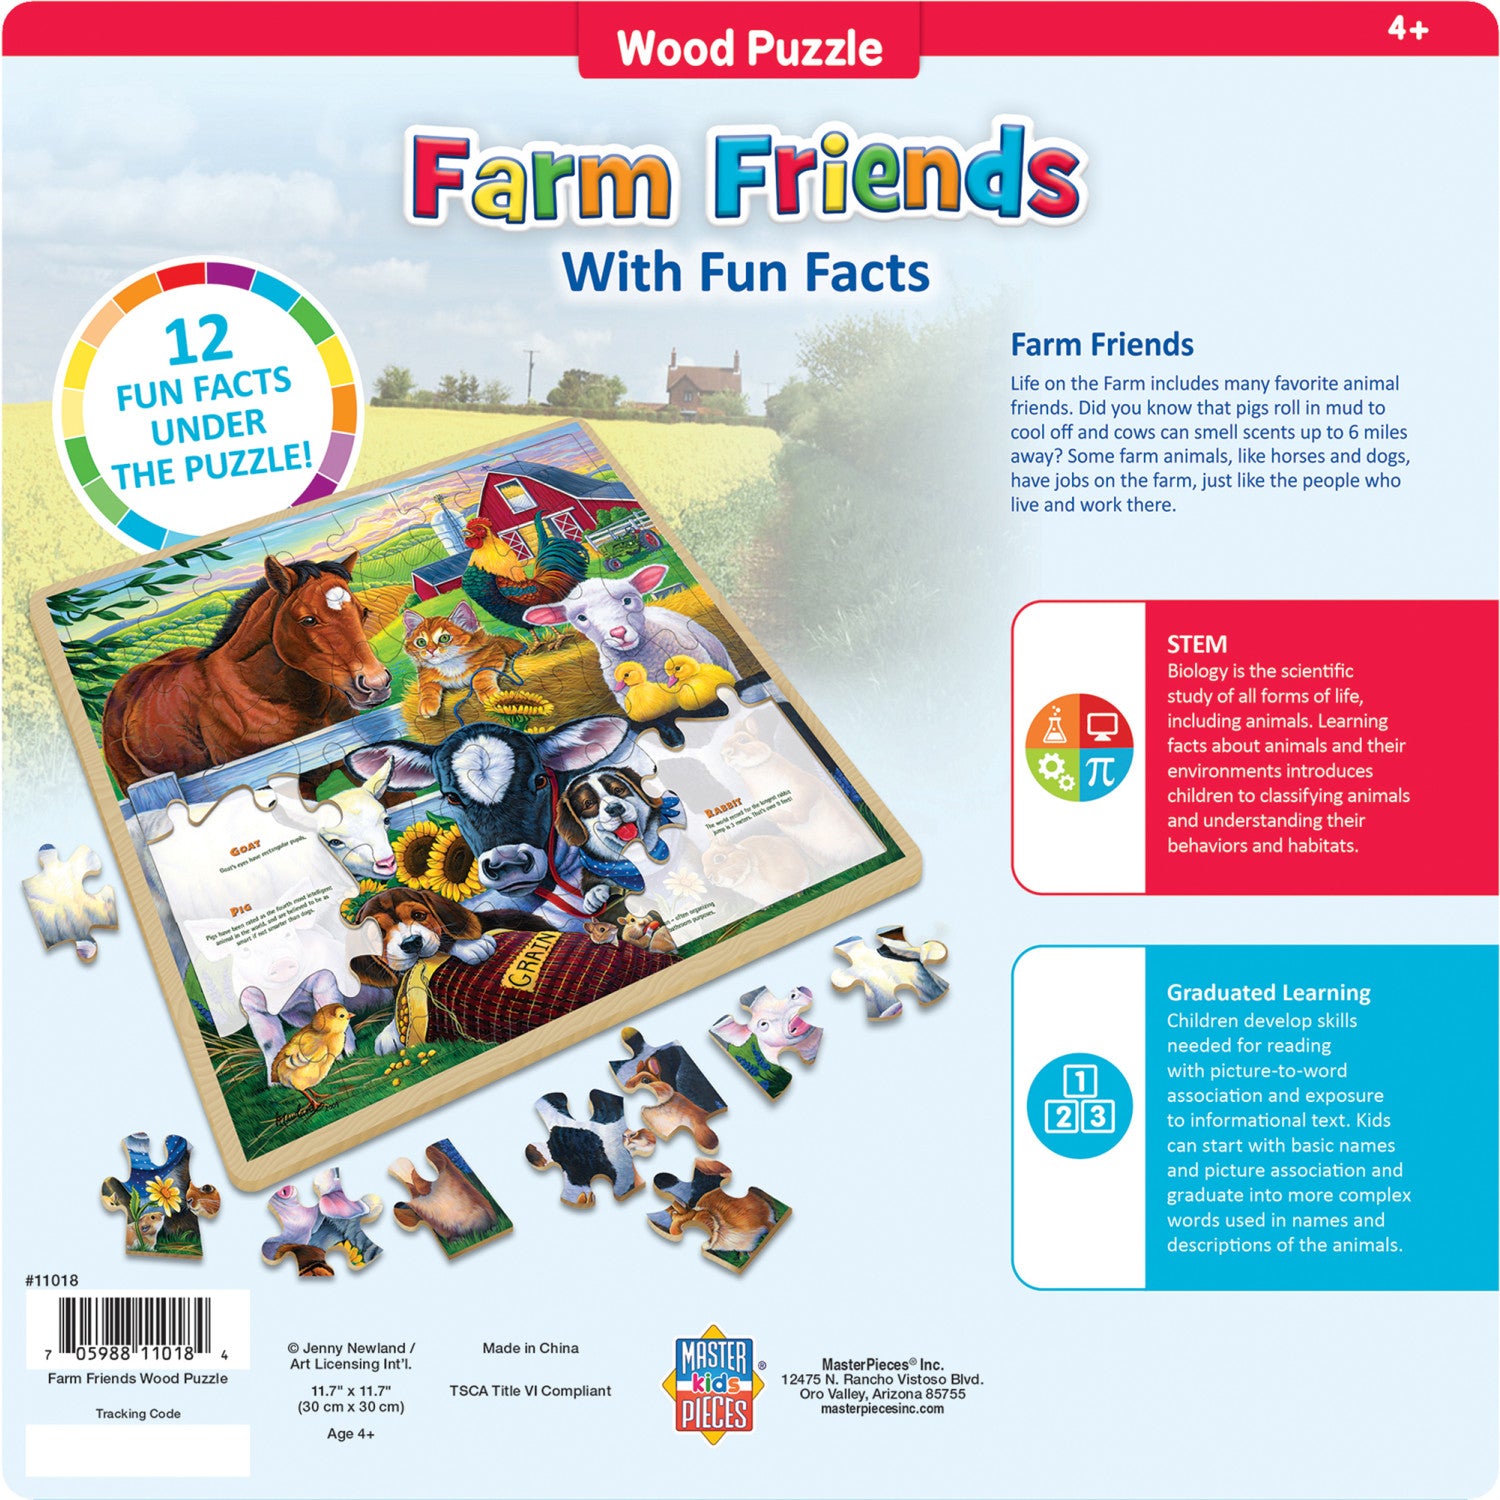 Wood Fun Facts - Farm Friends 48 Piece Wood Puzzle